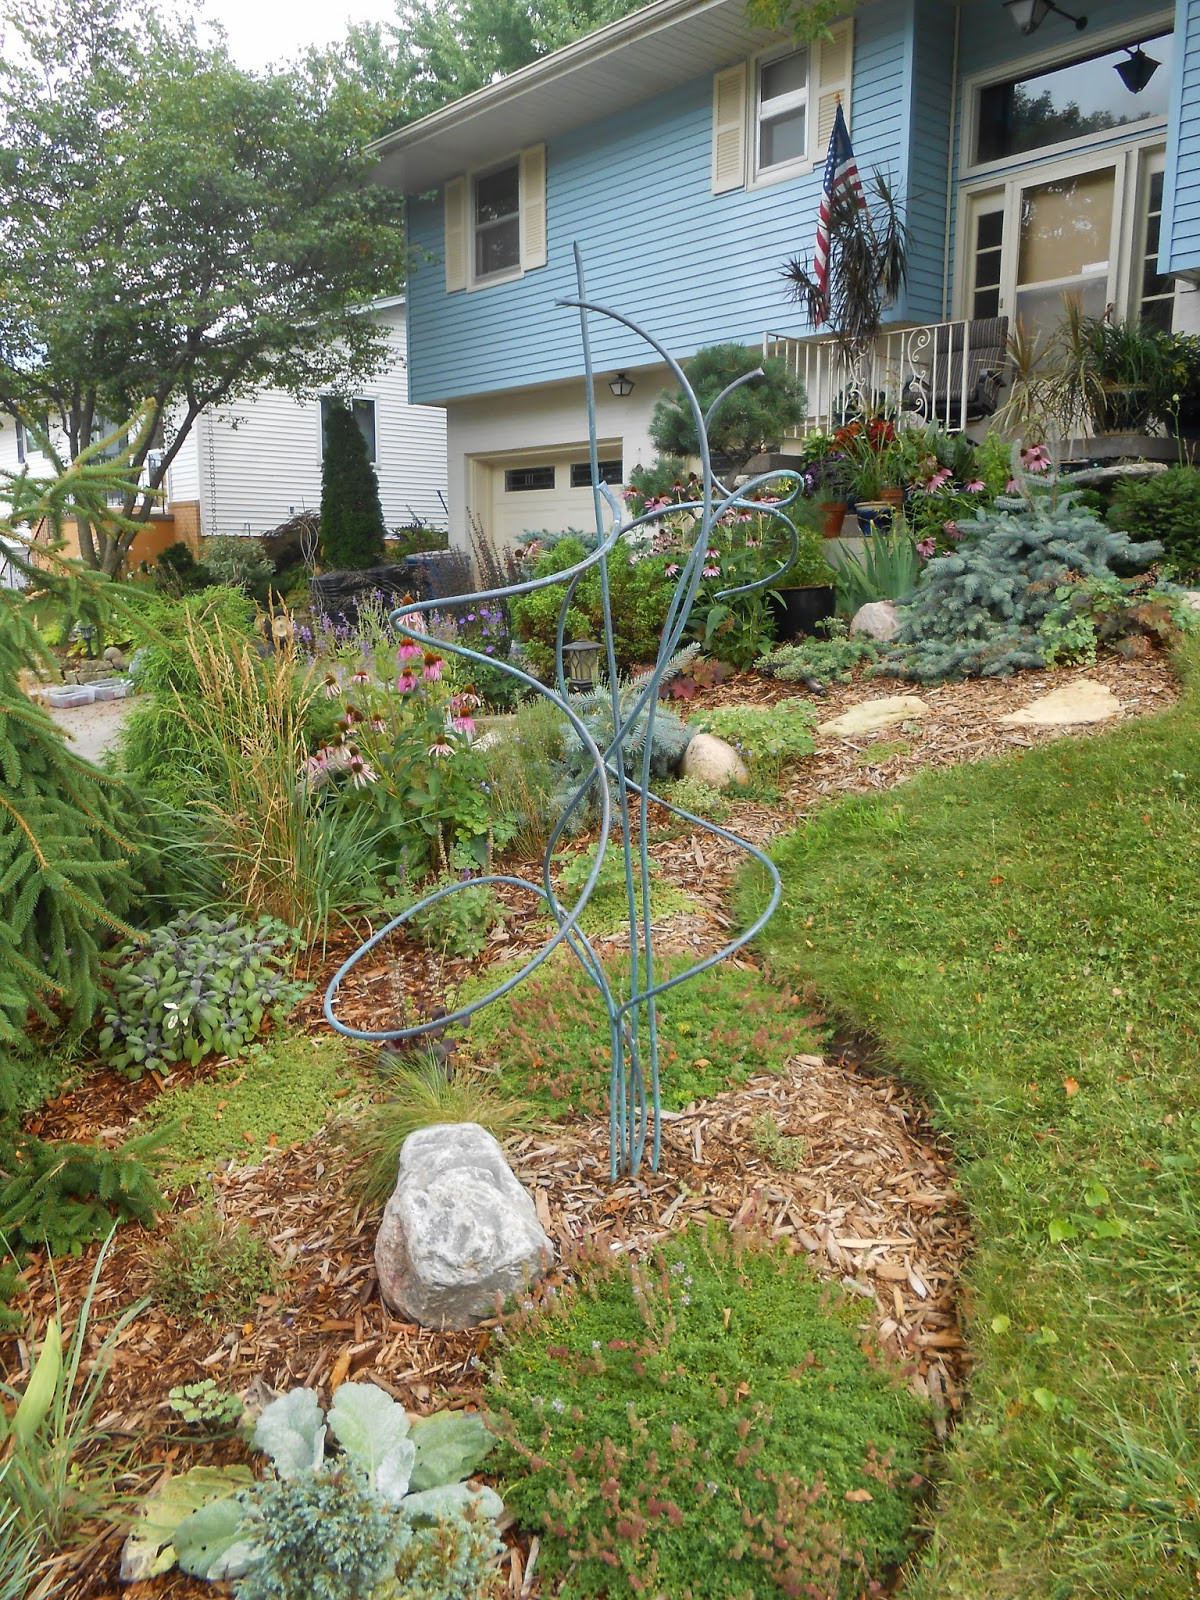 Best ideas about DIY Garden Art
. Save or Pin Sproutsandstuff DIY Copper Garden Art from Copper Tubing Now.